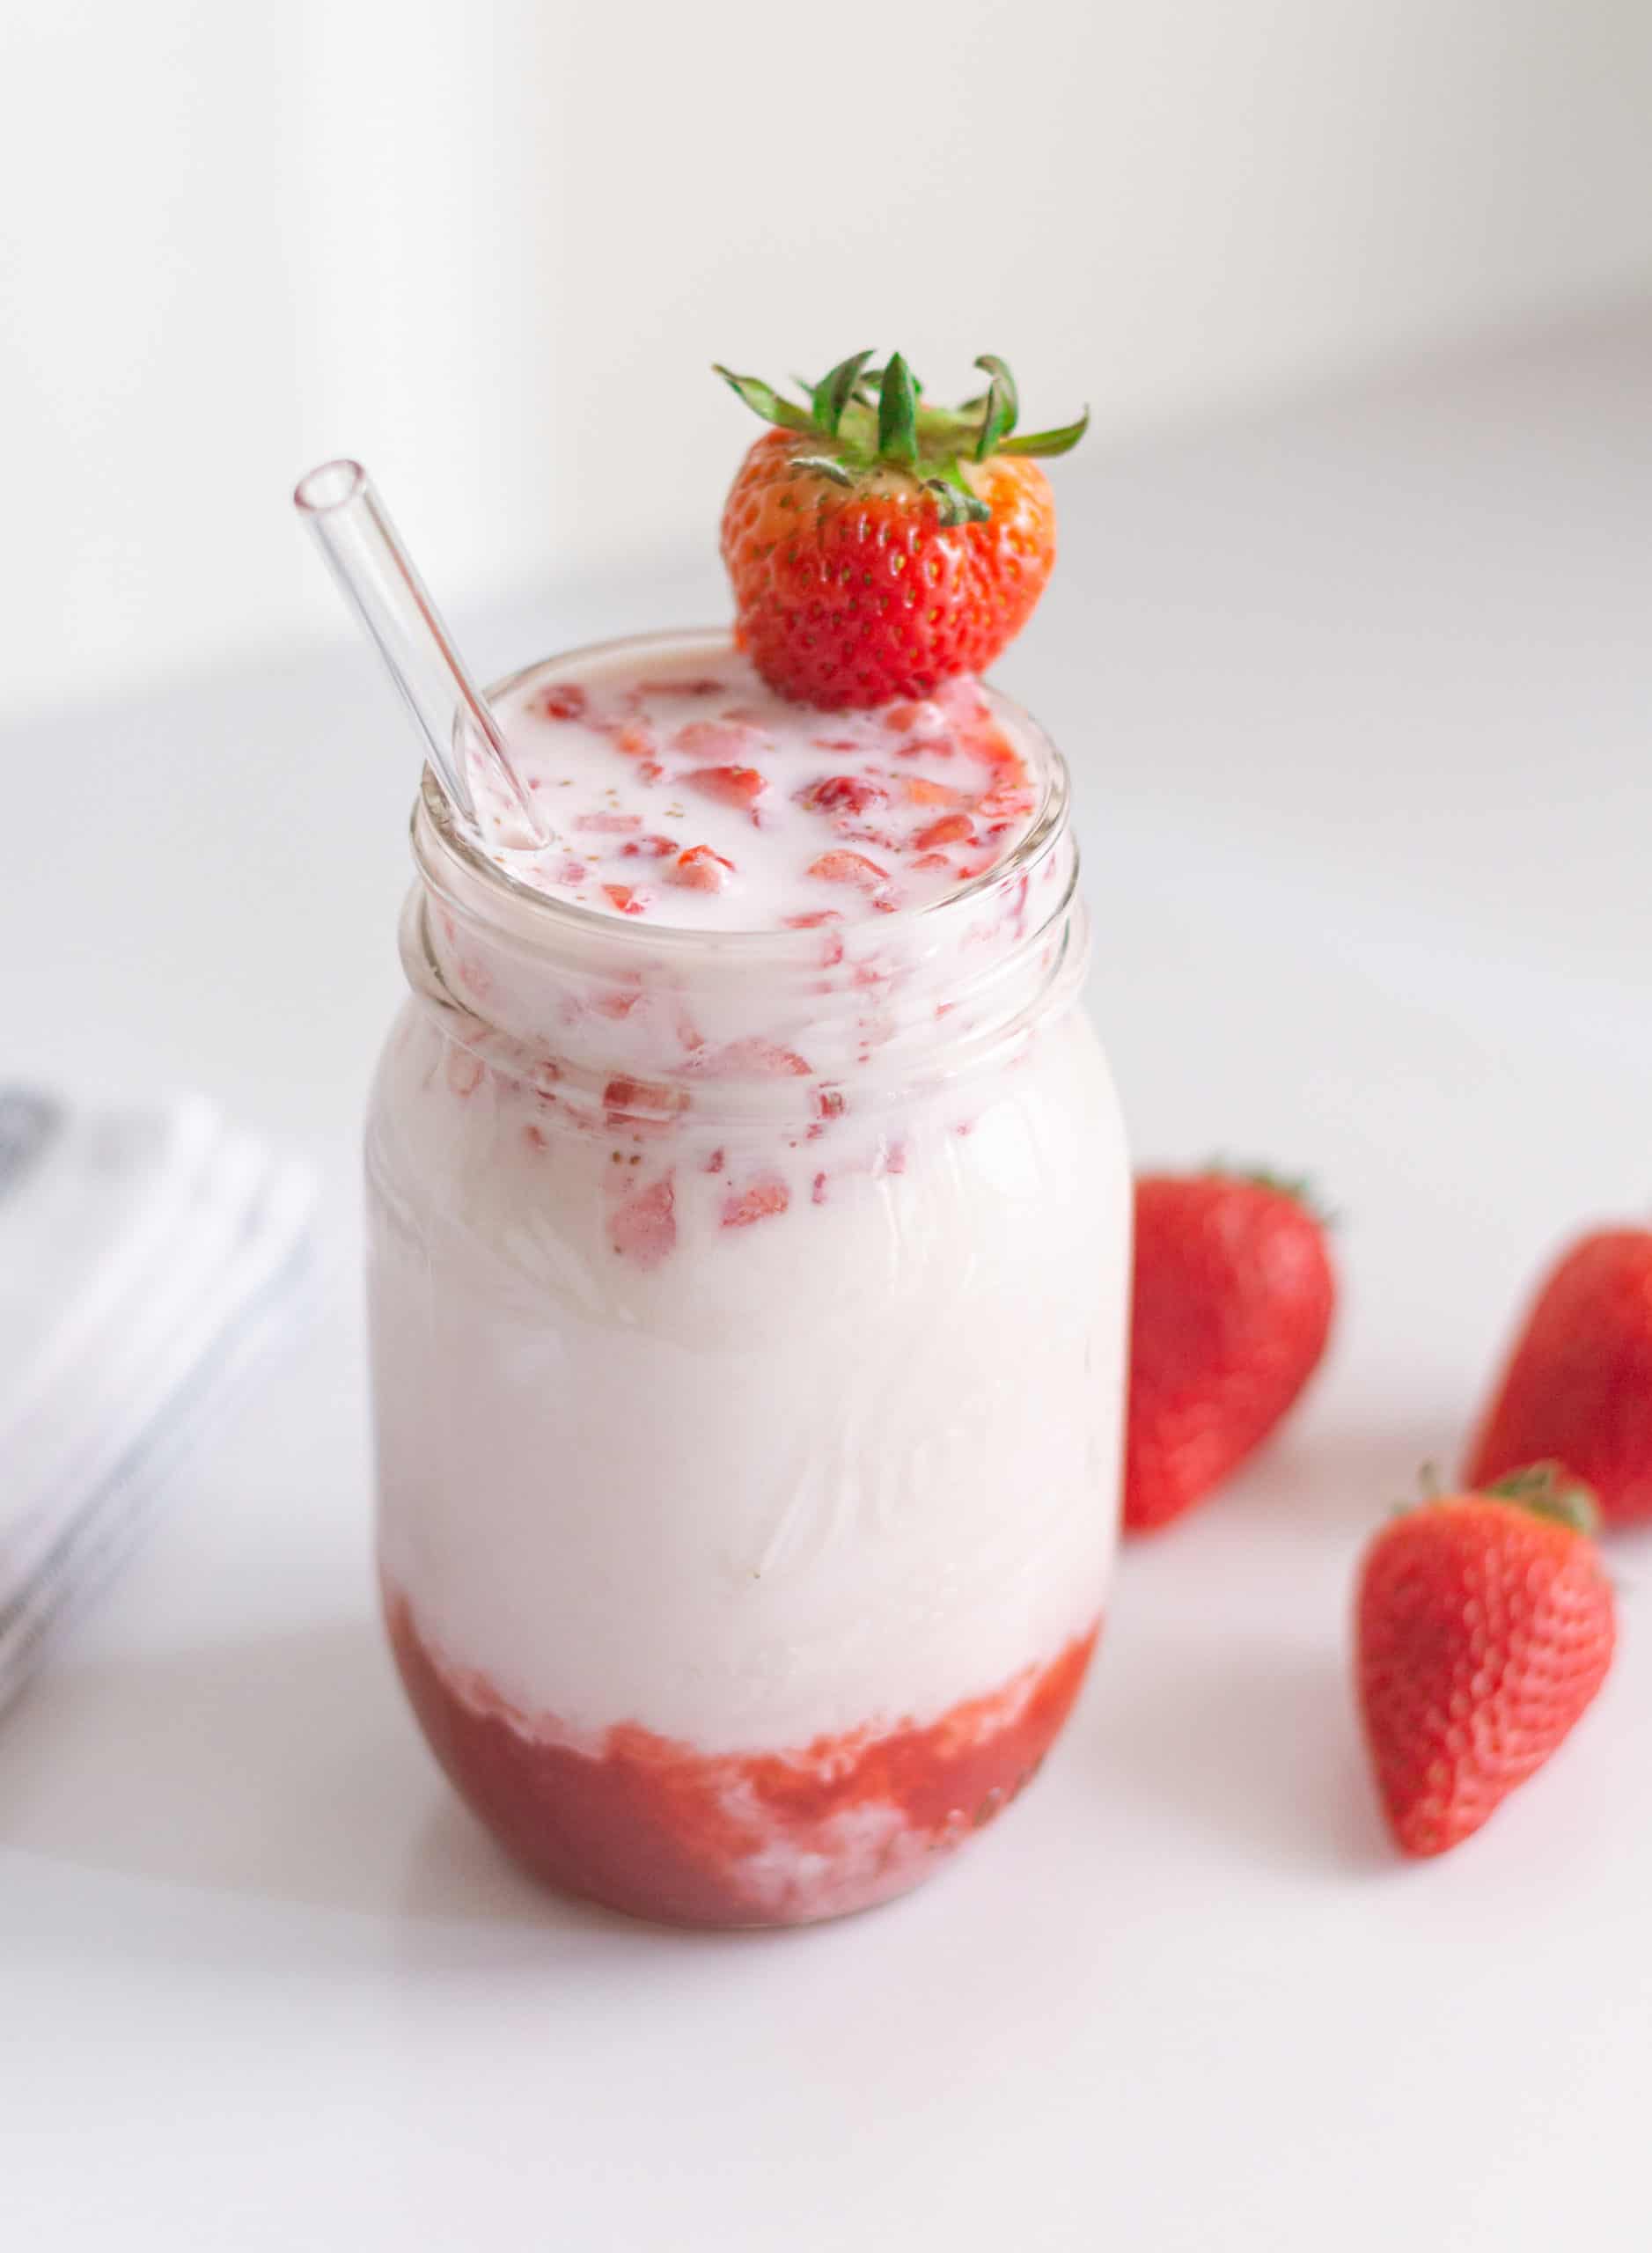 https://www.yesmooretea.com/wp-content/uploads/2020/04/Strawberry-Milk-8226-scaled.jpg